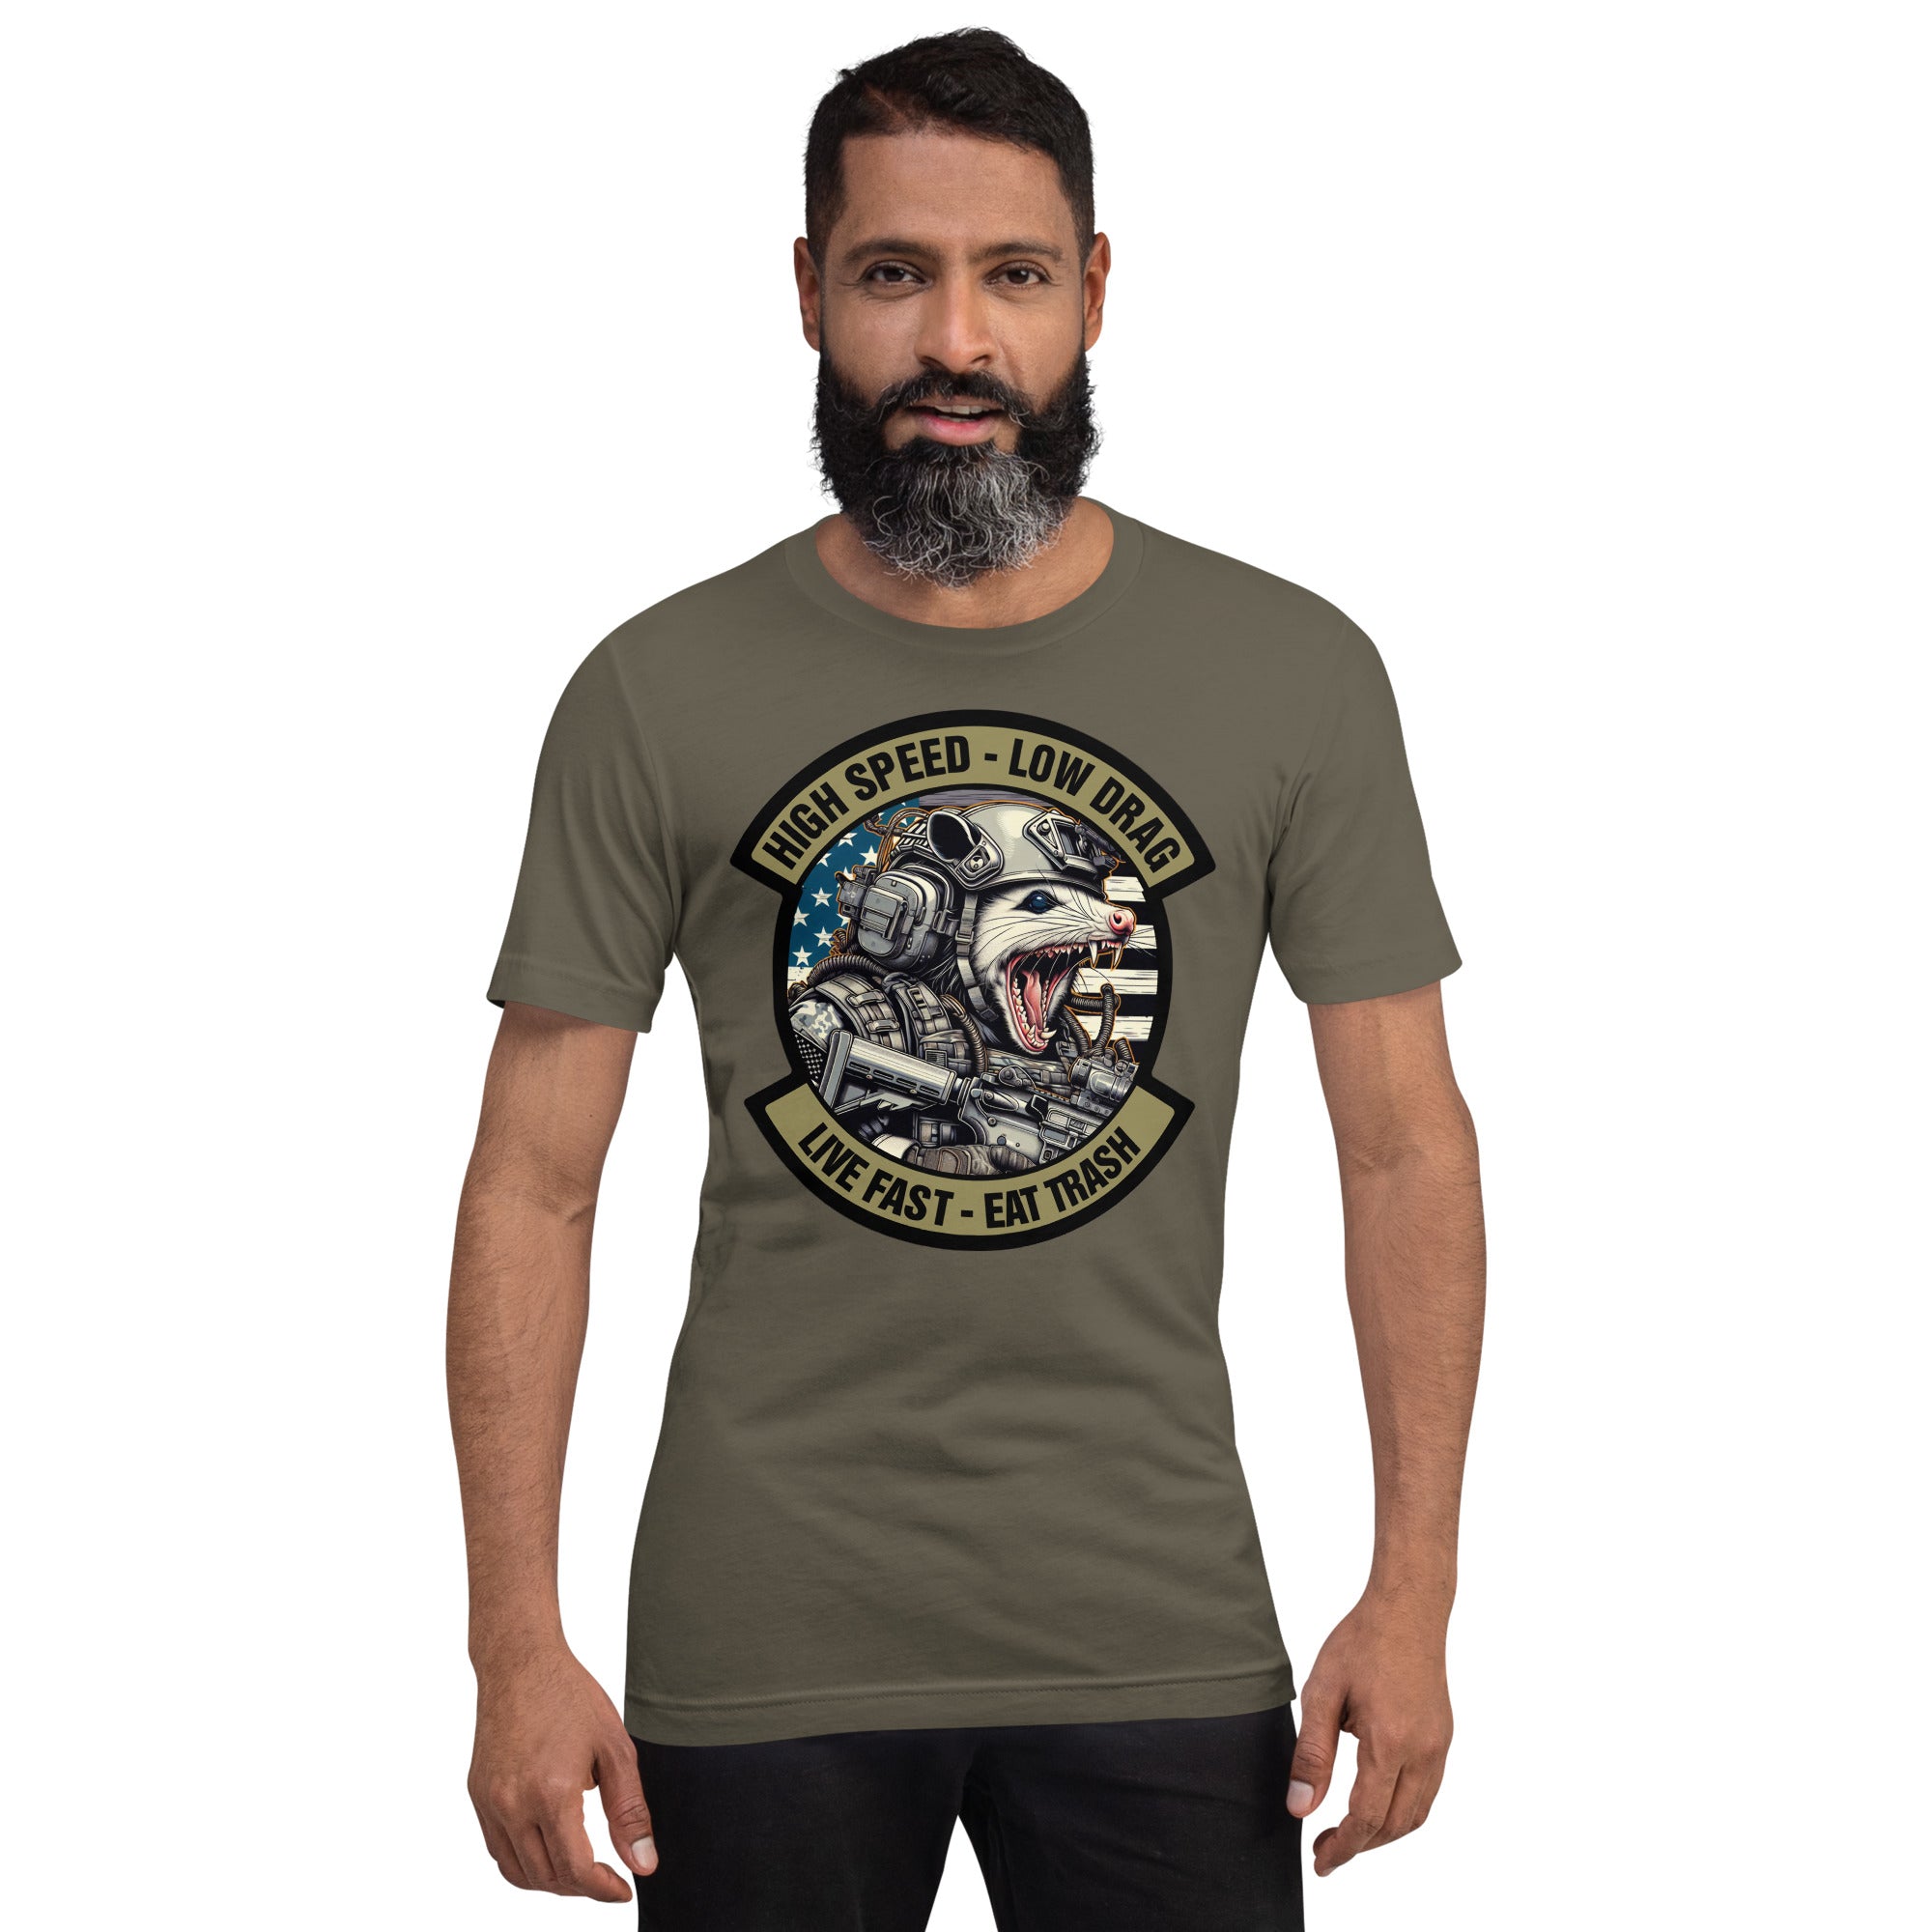 Tactical Possum Street Cat - High Speed - Low Drag - Live Fast - Eat Trash - Unisex - t-shirt